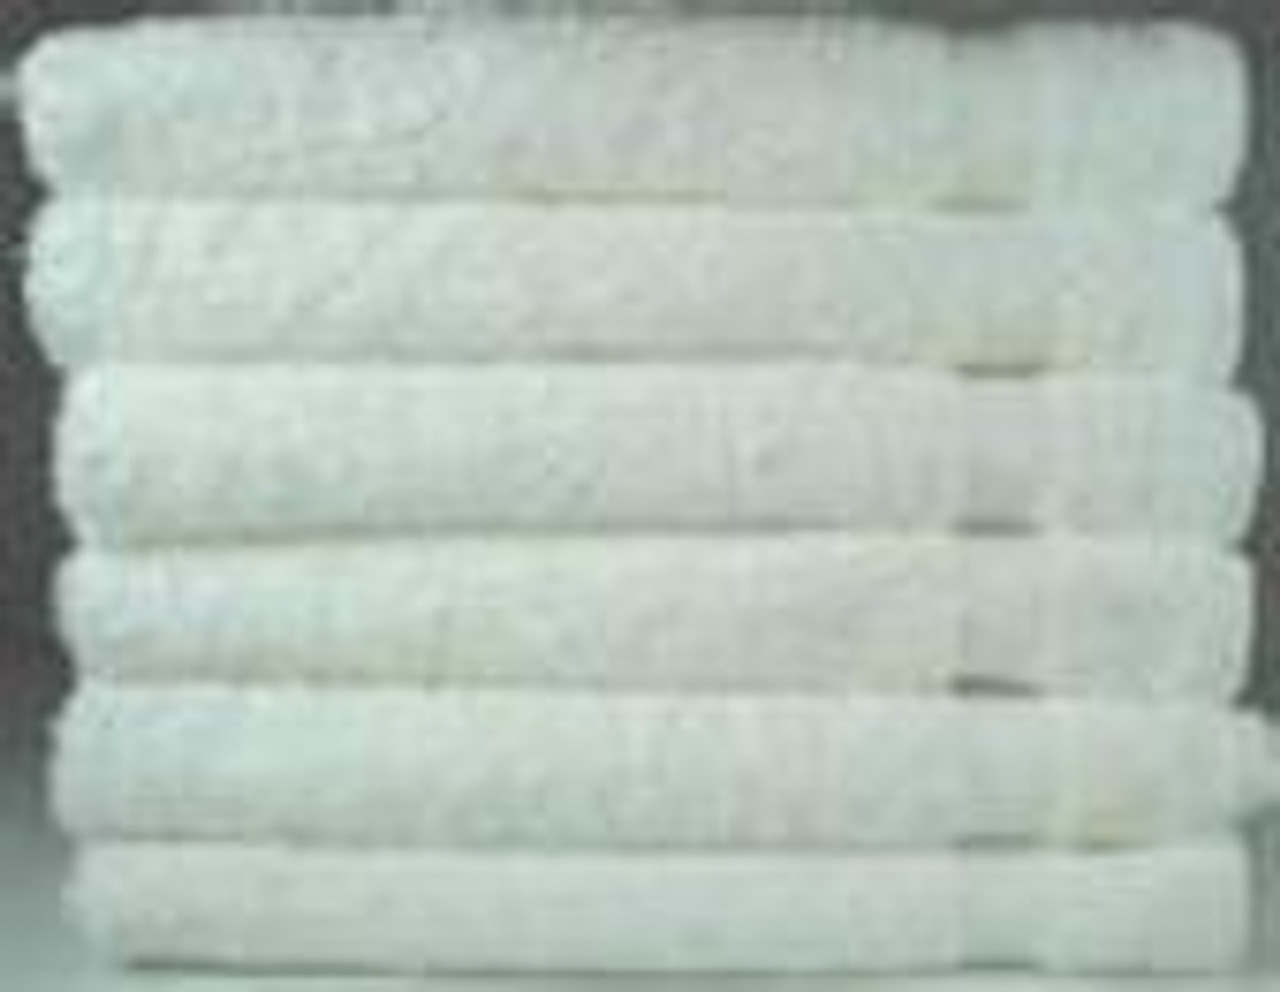 Wholesale 12 X 12 White Wash Cloths 0.75 Lbs